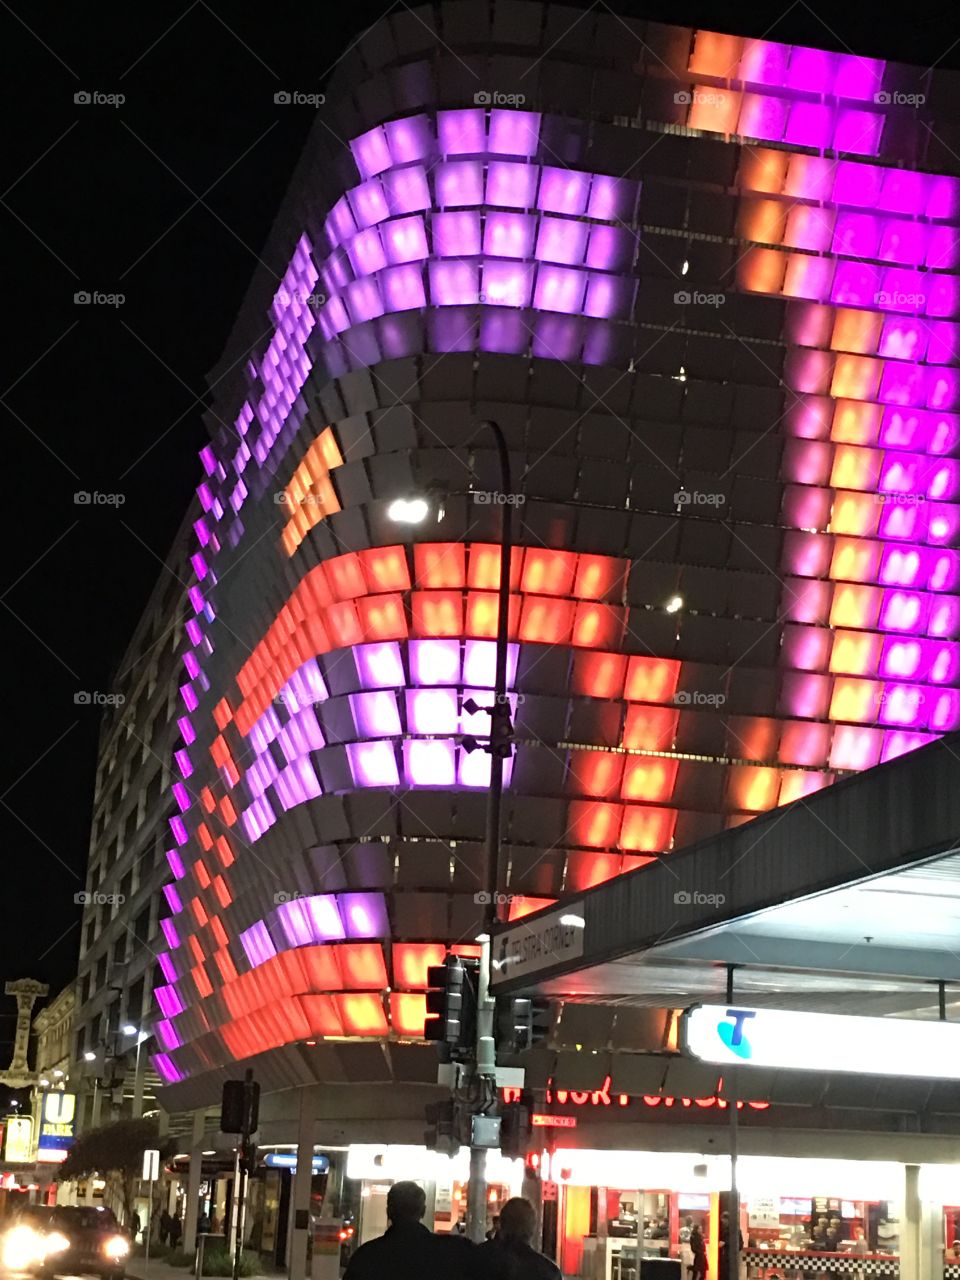 Neon city lights rundell
Mall Adelaide south Australia 